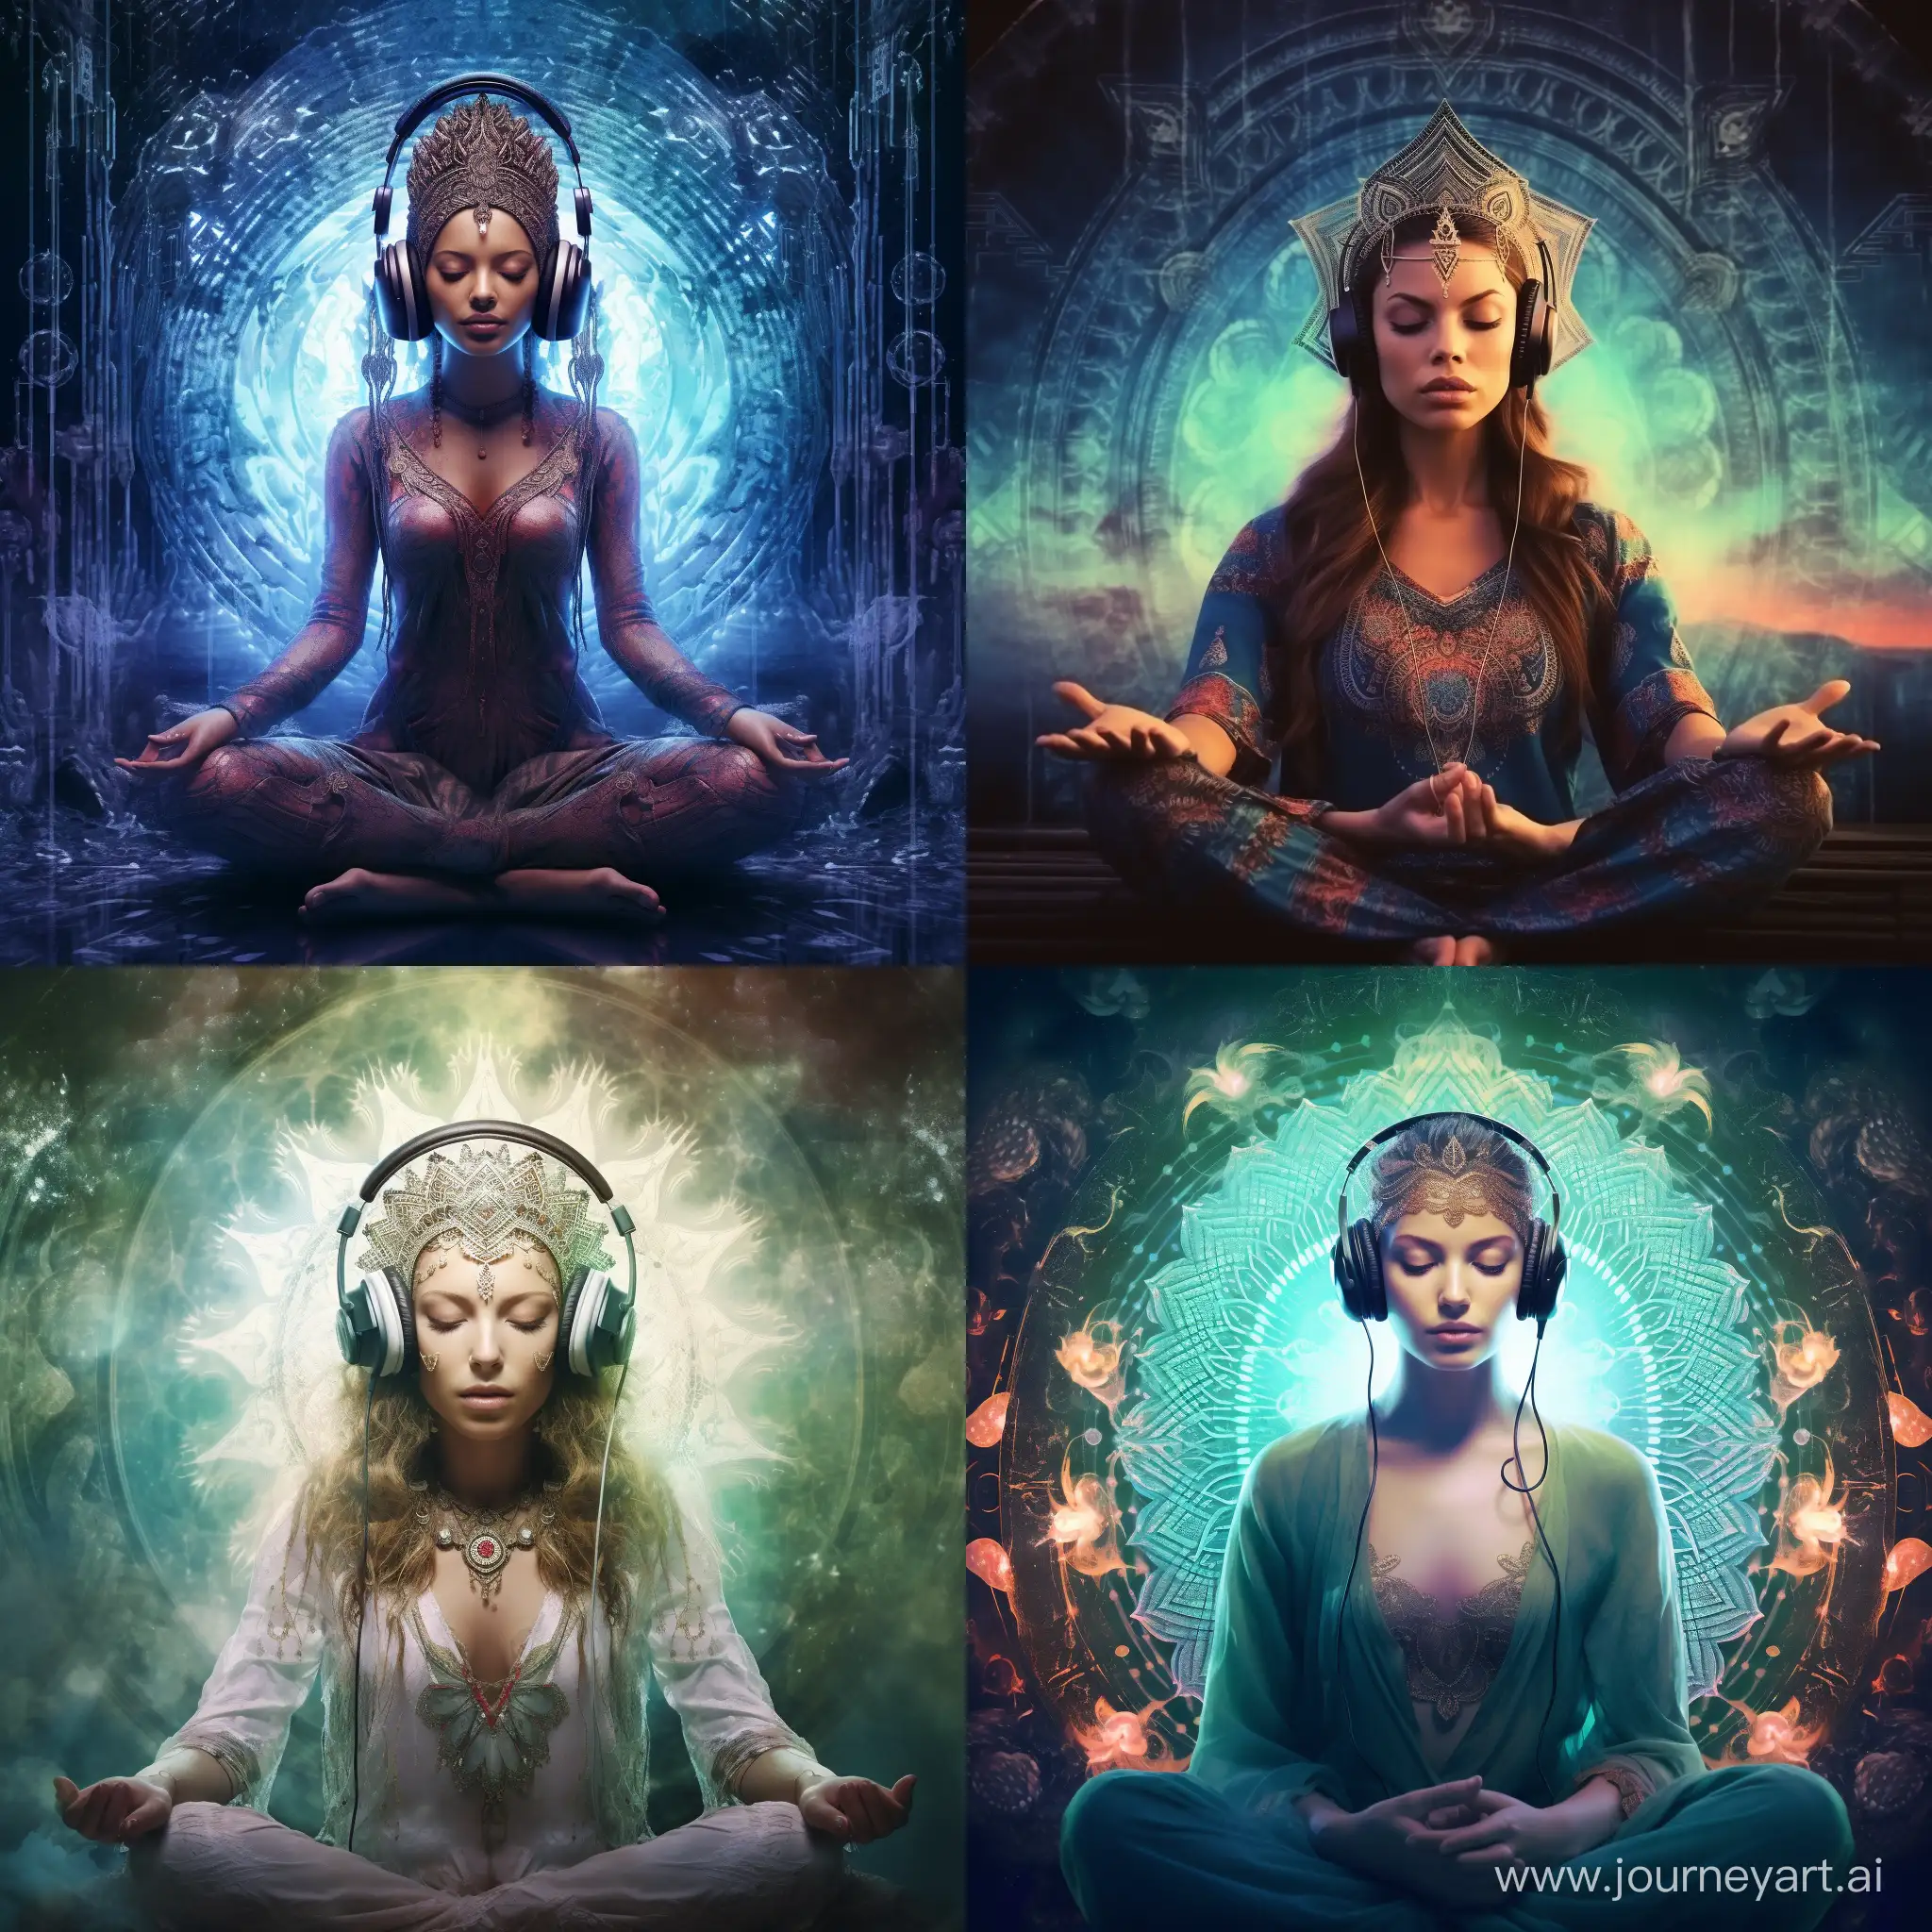 Meditating-Figure-in-Mystical-Art-with-Headphones